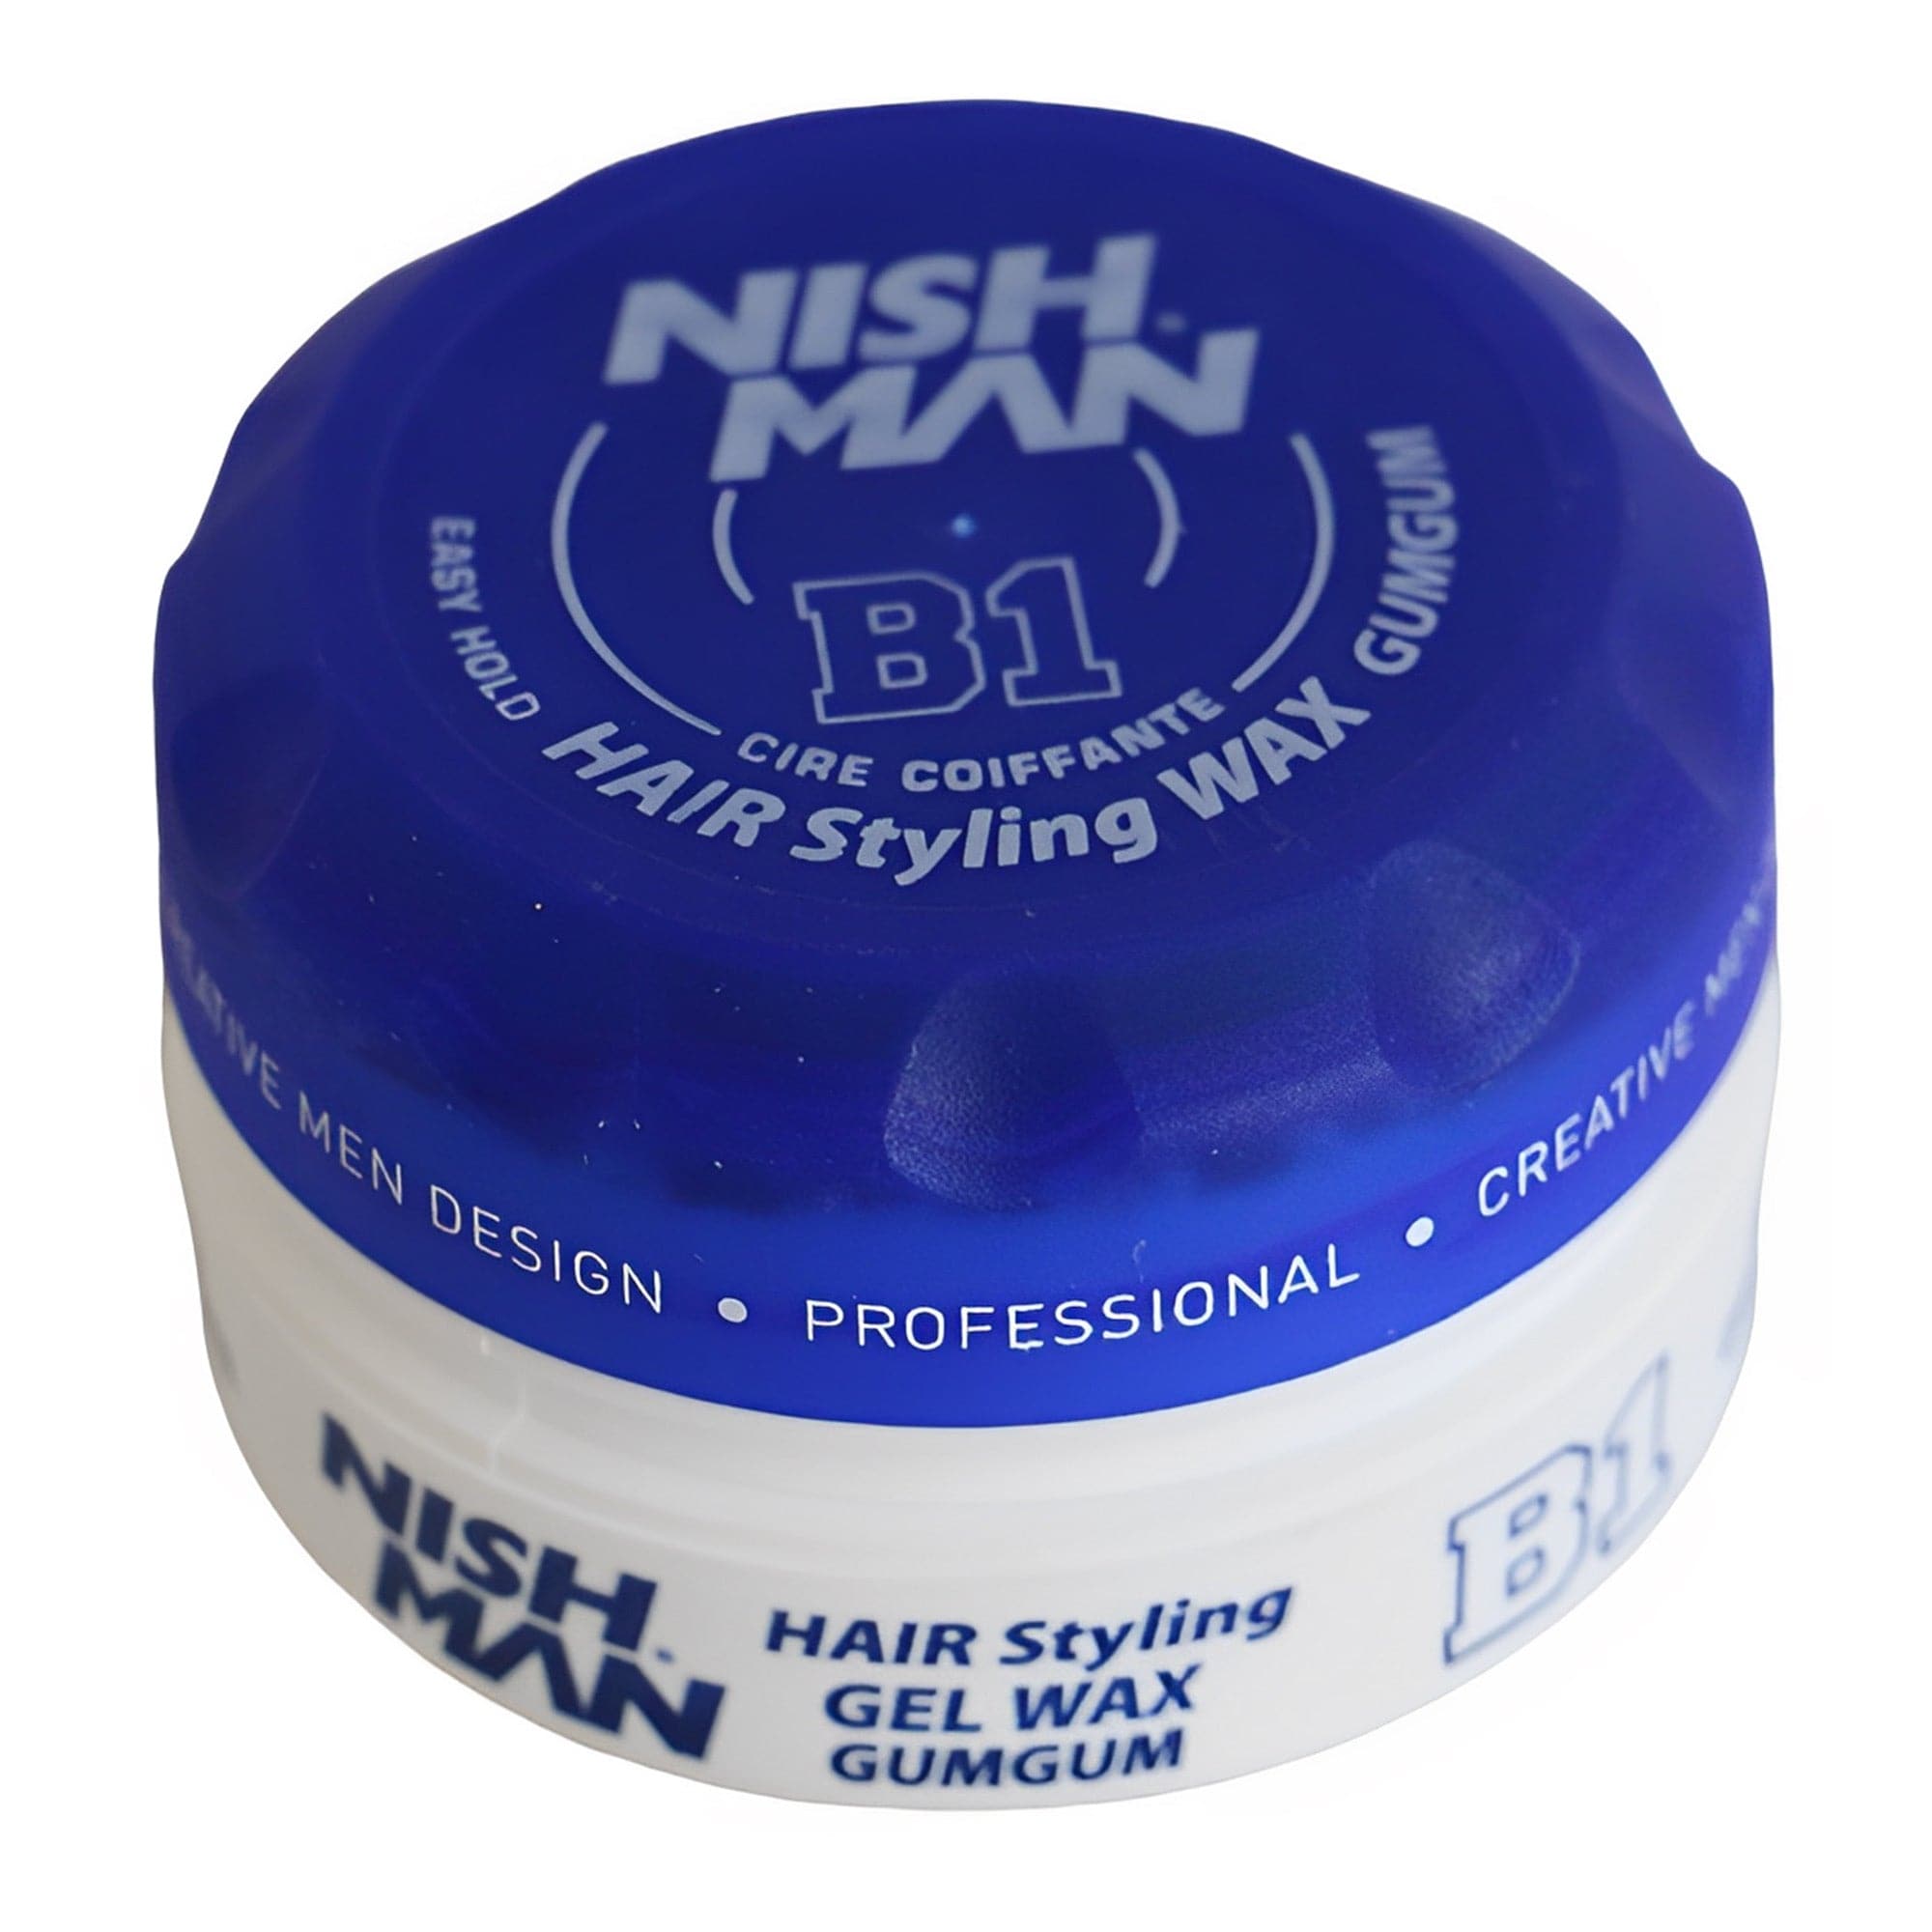 Nishman - Hair Styling Gel Wax B1 Gumgum 150ml